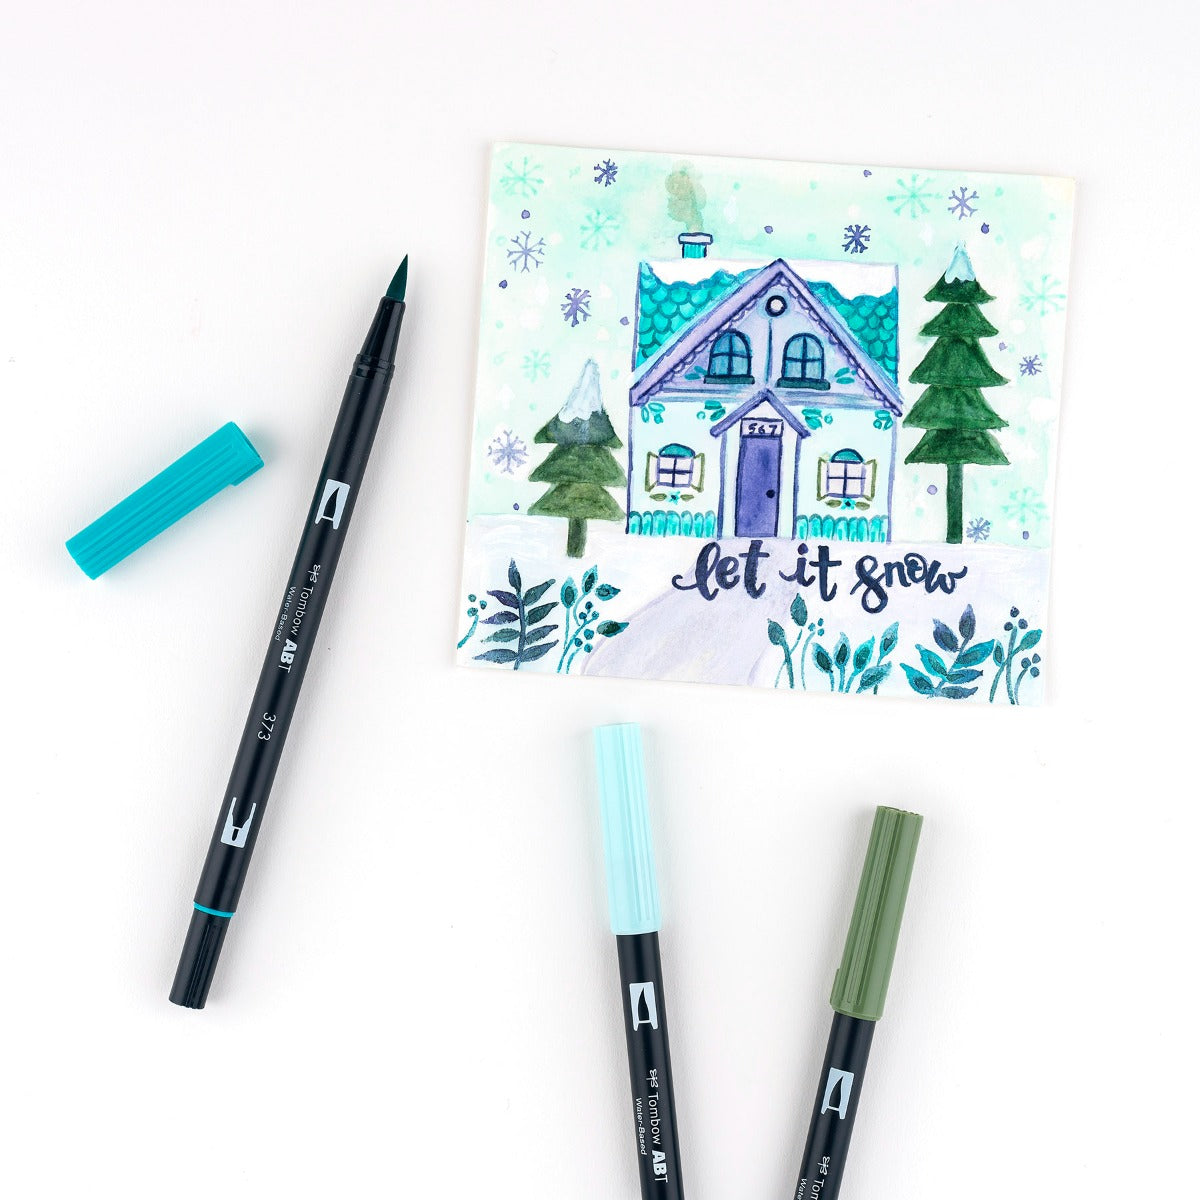 Dual Brush Pen Art Markers, Wonderland, 6-Pack